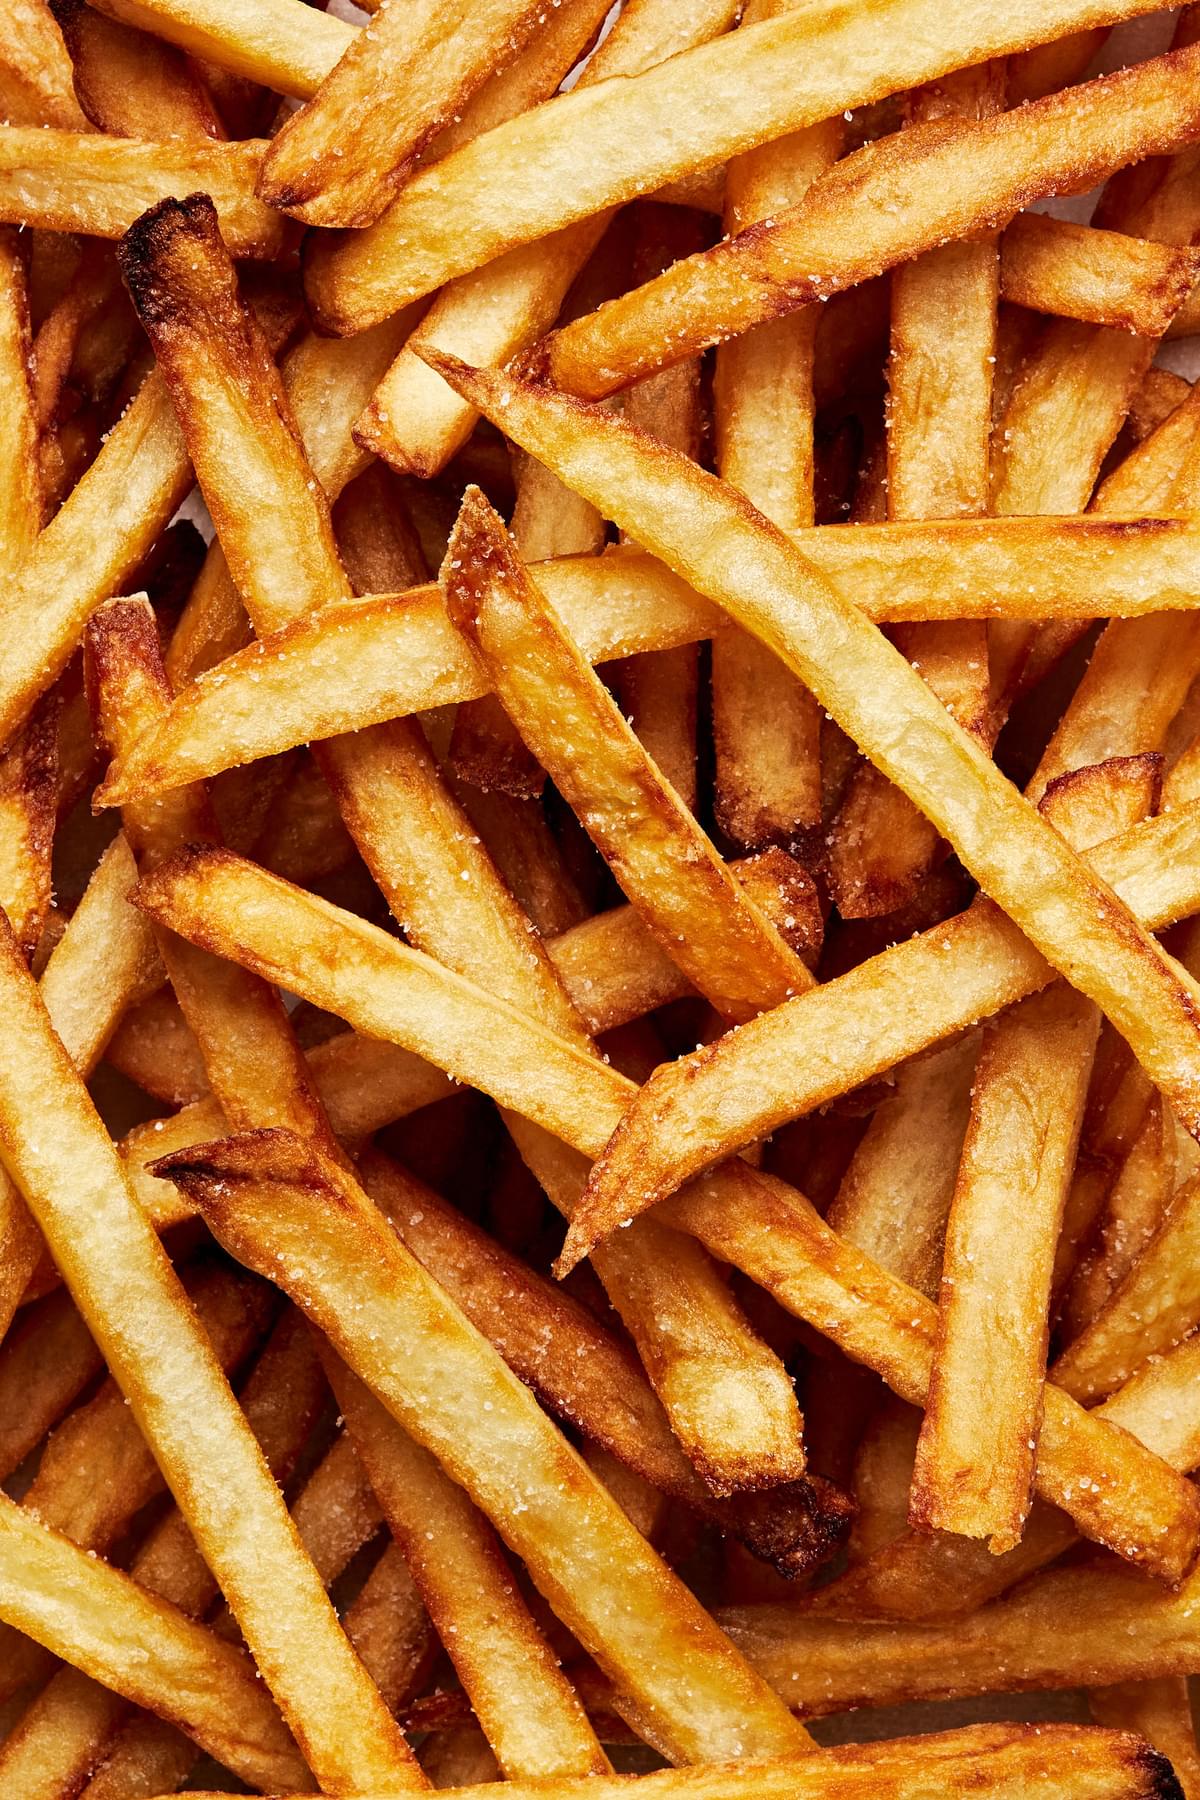 crispy, golden homemade French fries seasoned with salt and pepper